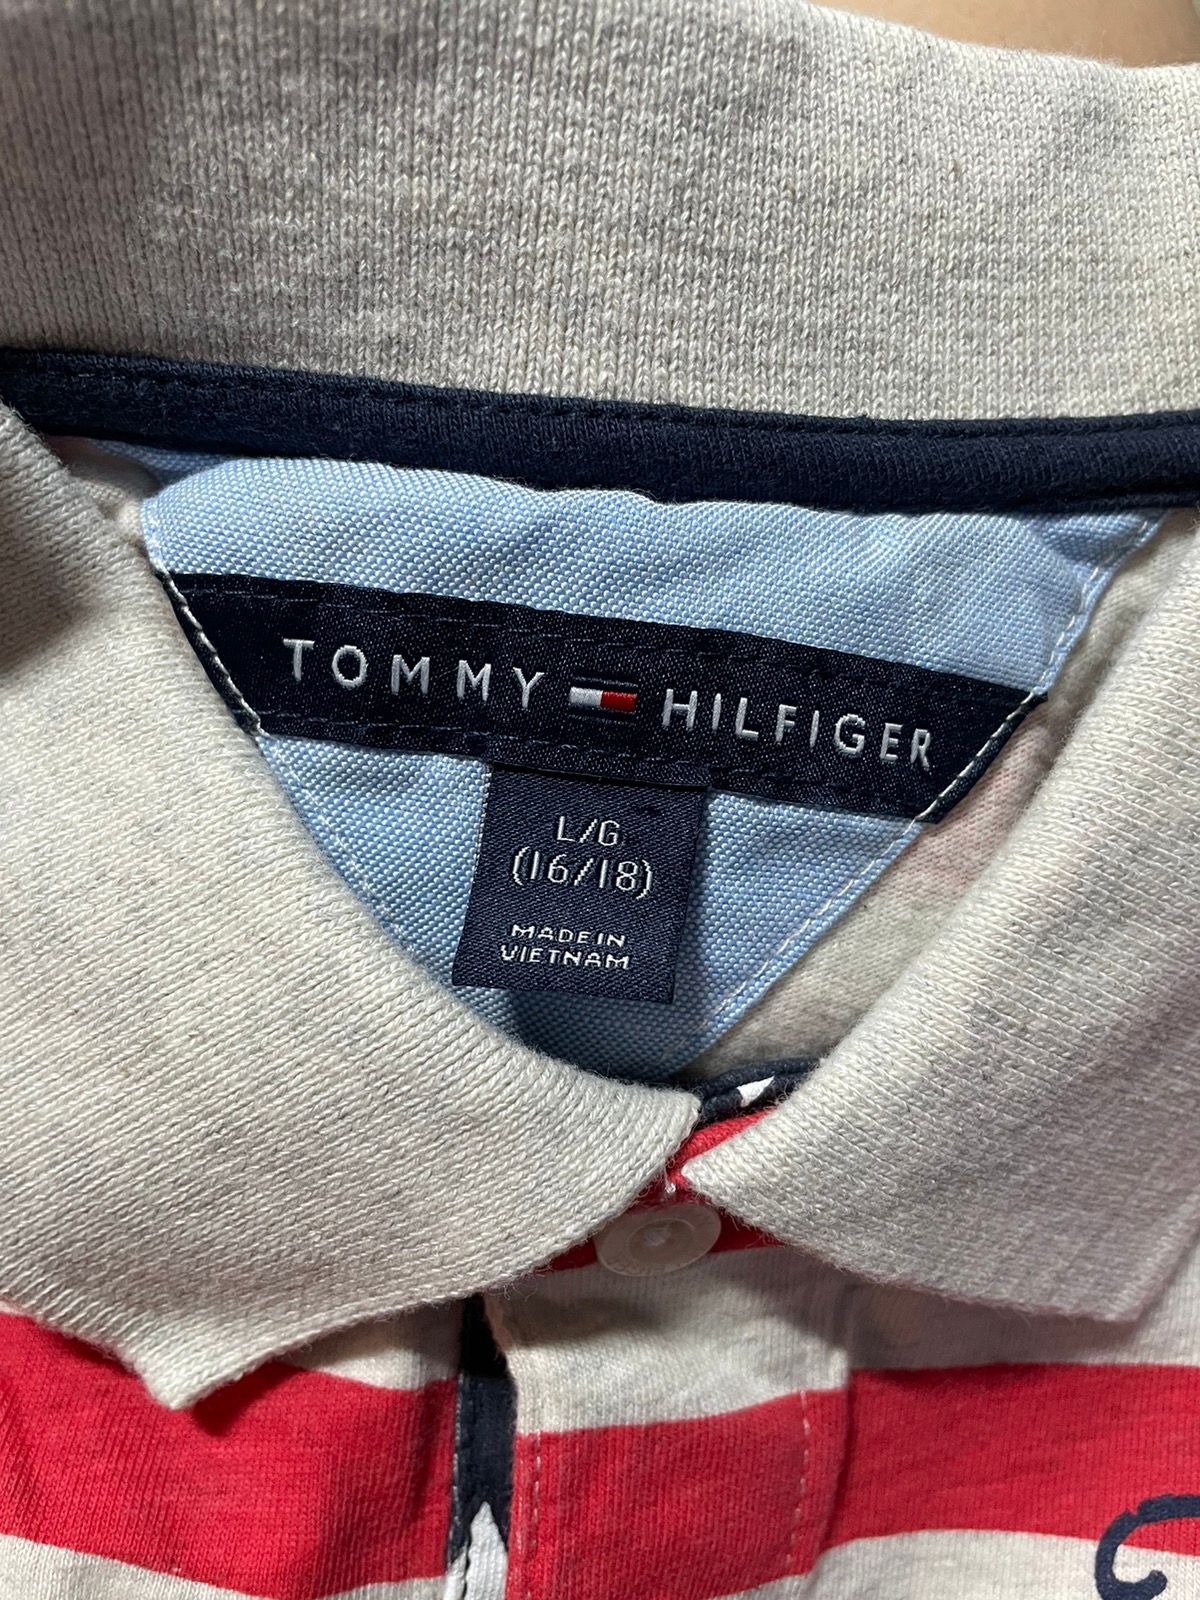 Tommy Hilfiger Tommy Hilfiger Shirt Size US S / EU 44-46 / 1 - 3 Thumbnail